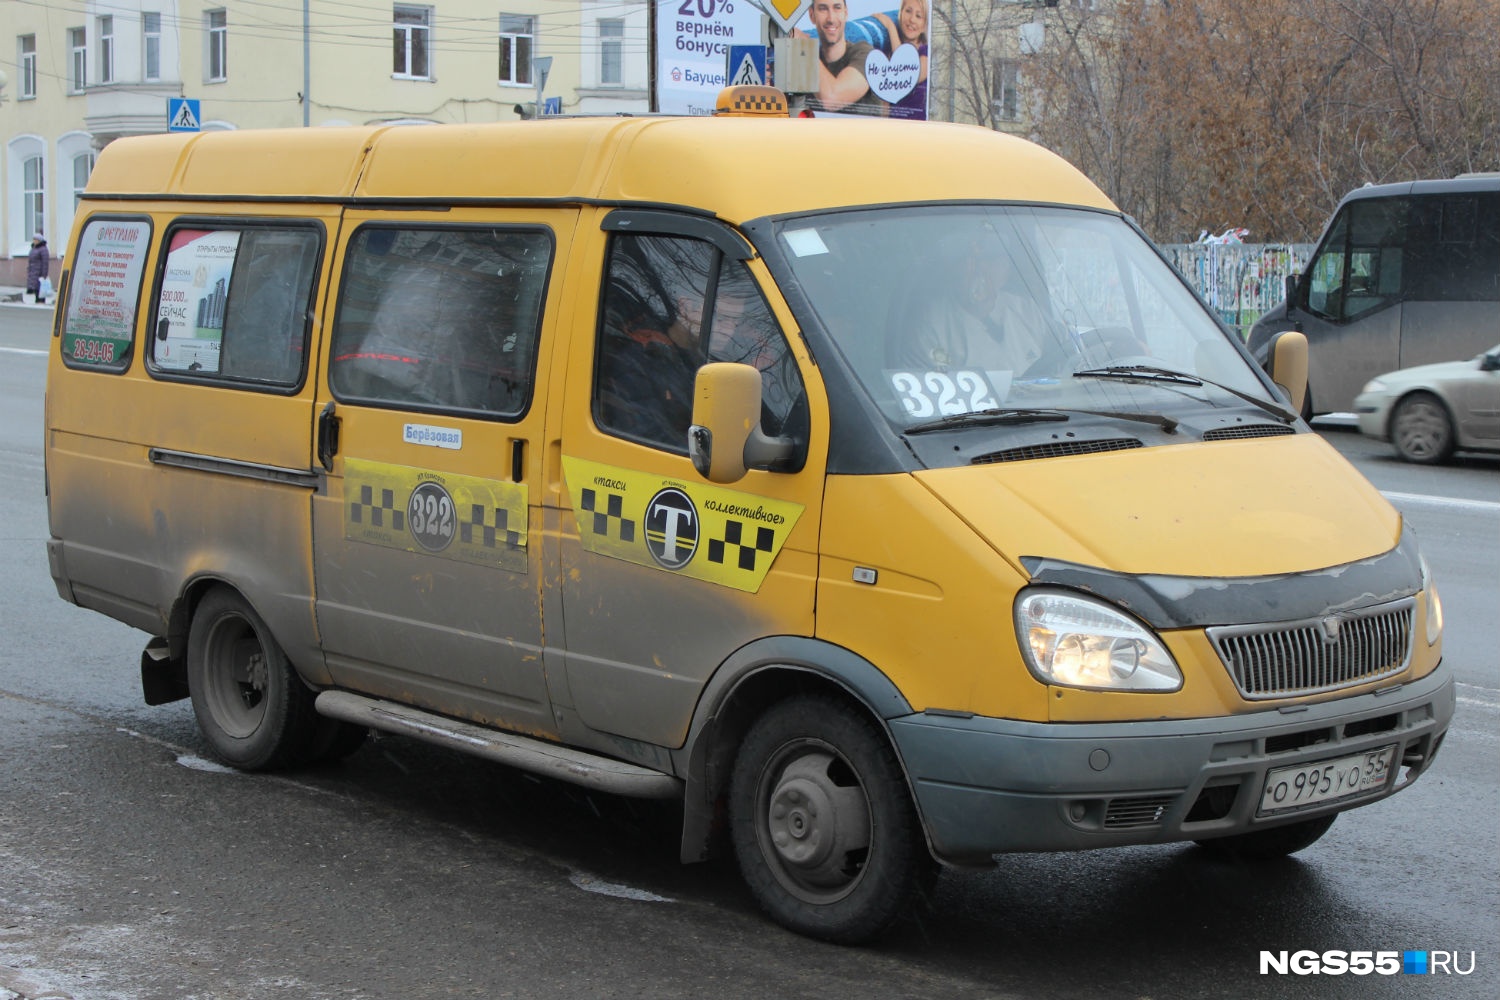 Маршрутное такси дону